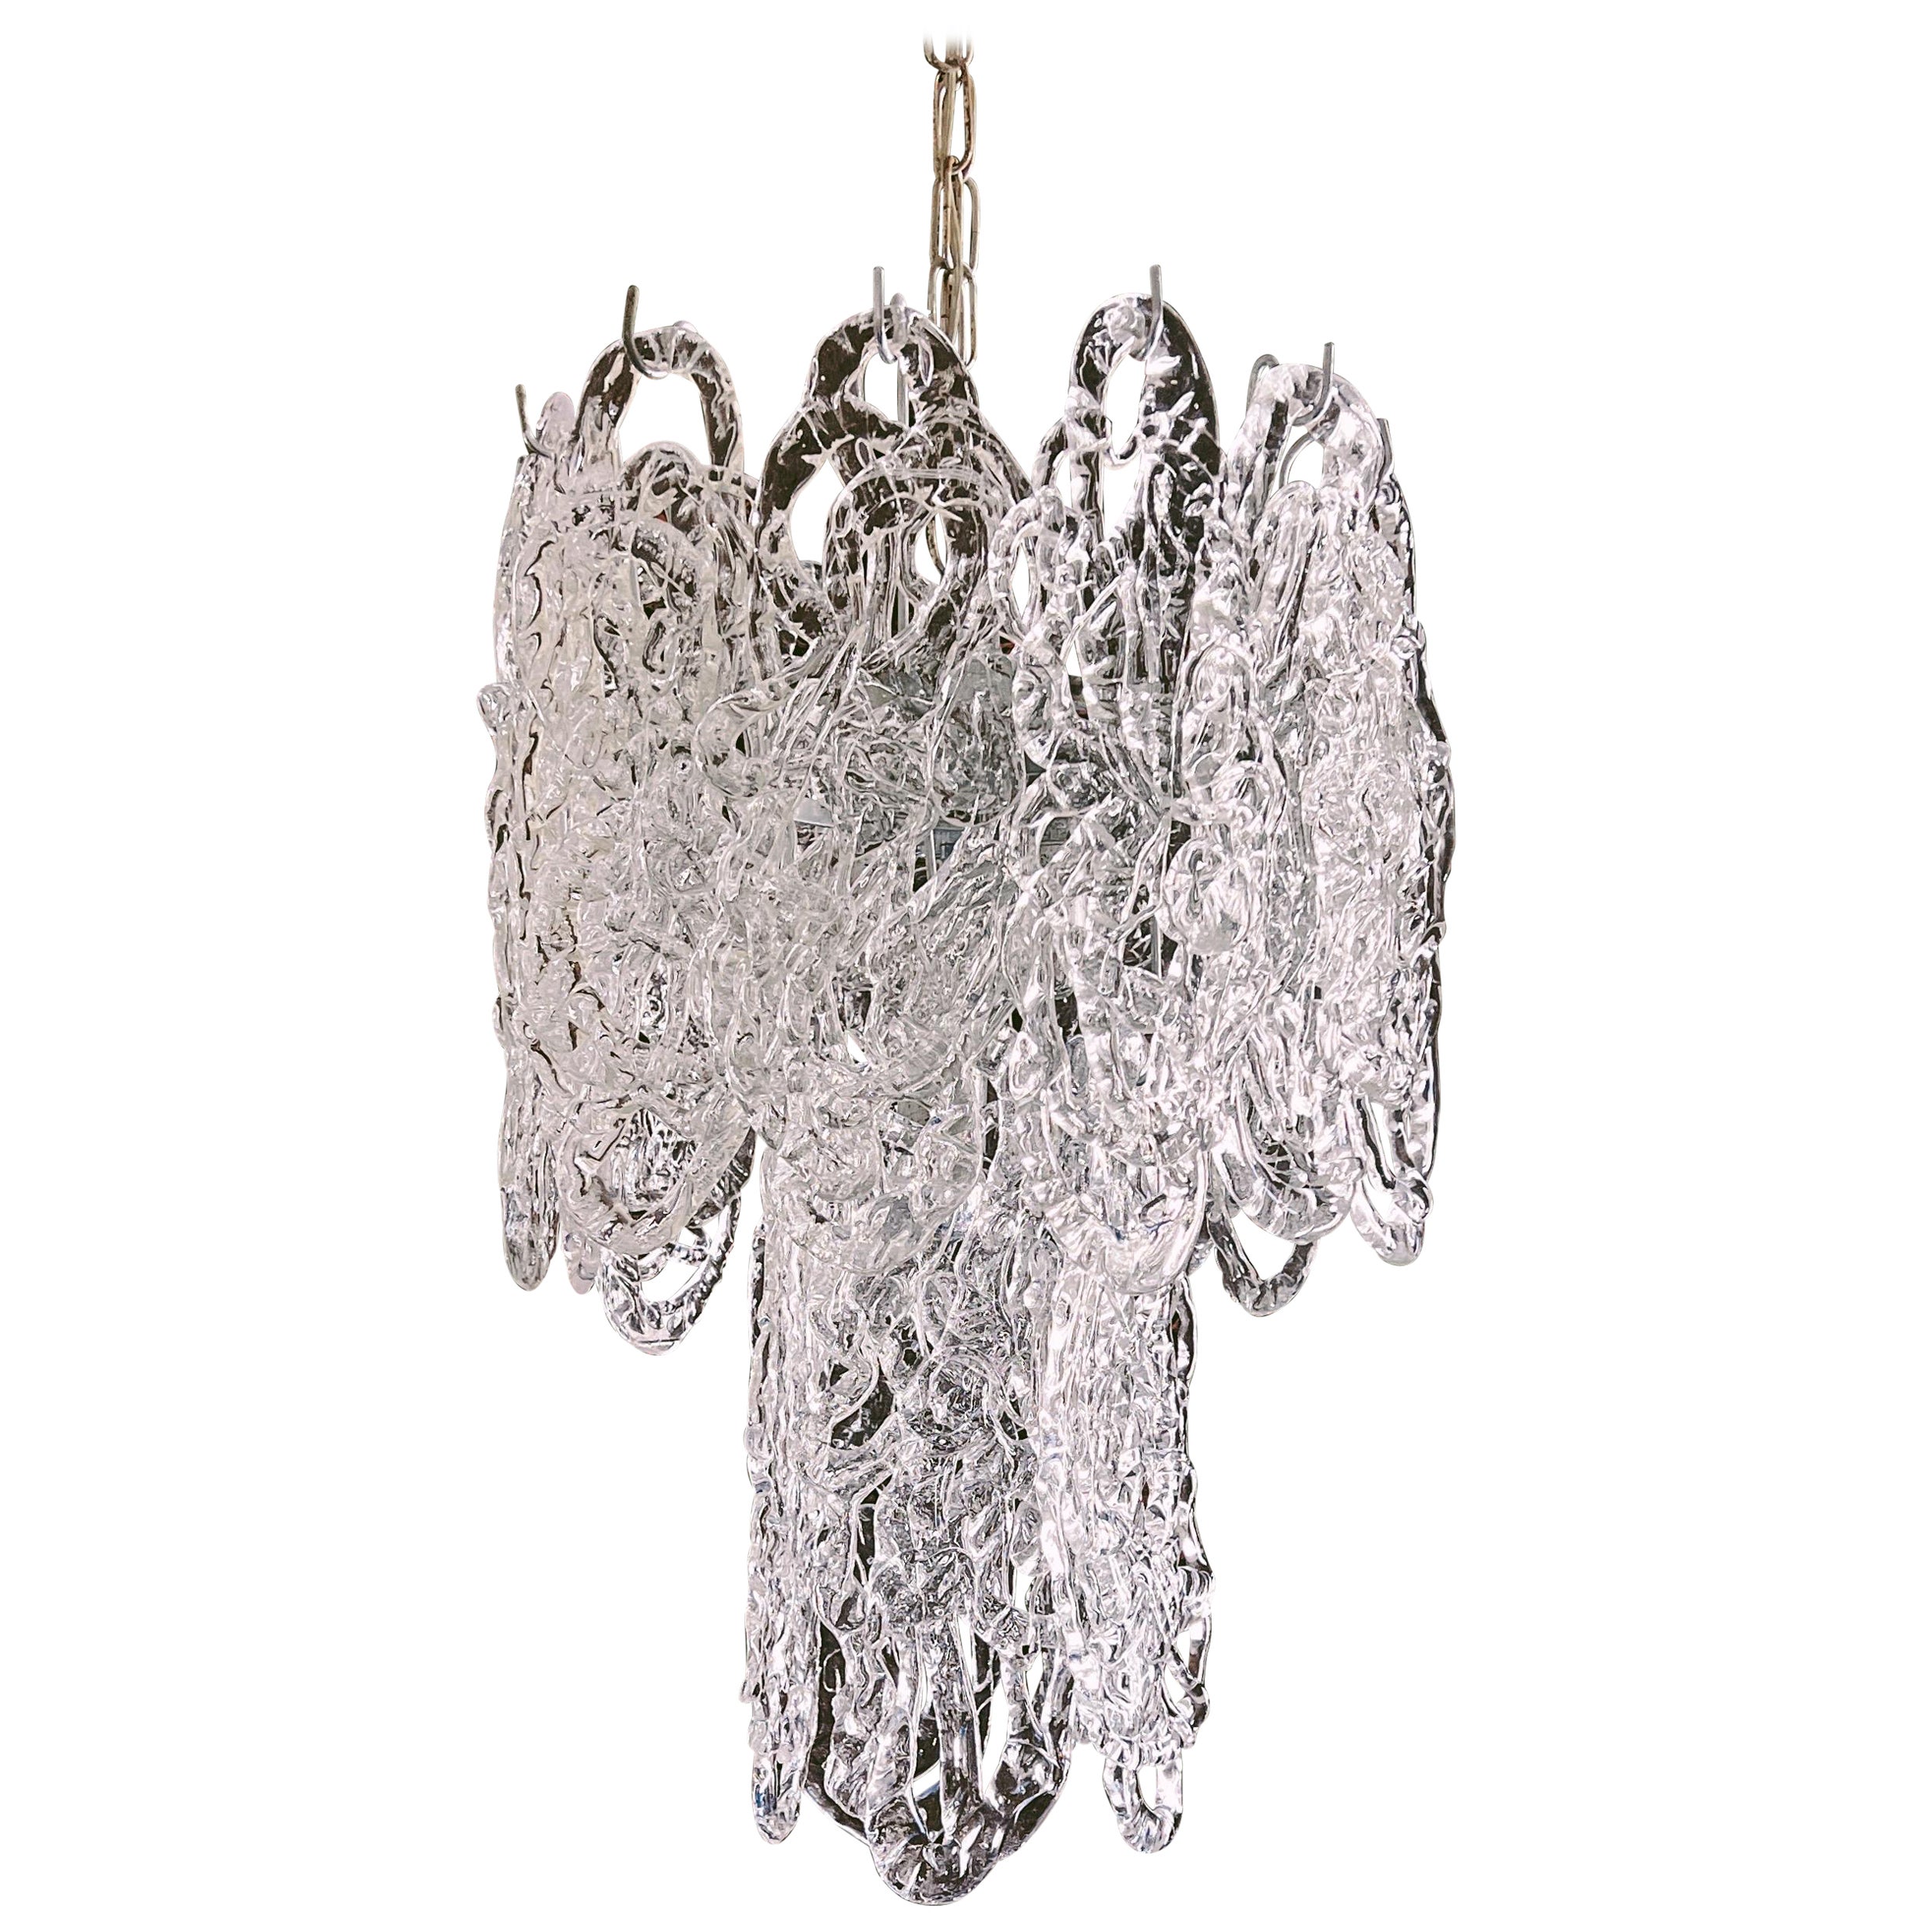 1960s Murano glass chandelier in model "Ragnatela" by mazzega For Sale